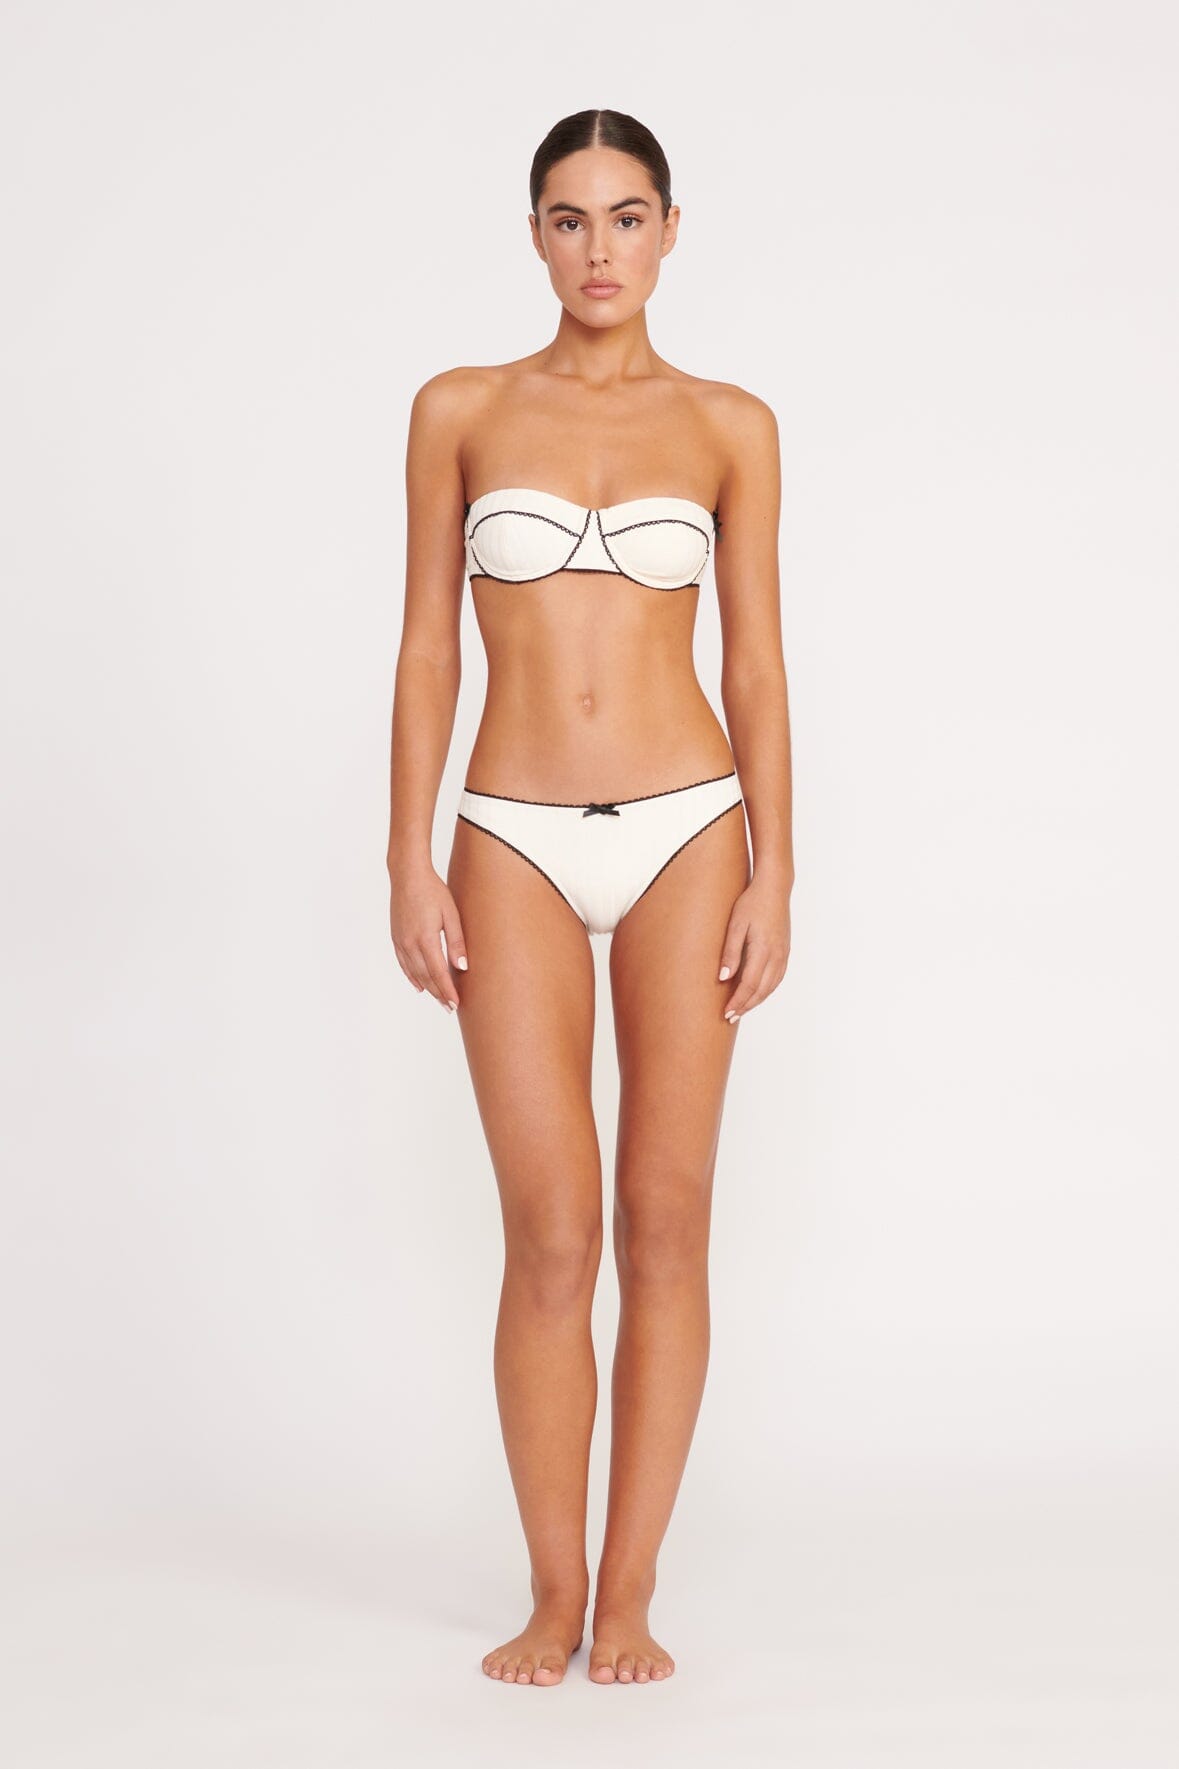 Shop Ivory Rose Women's Bikini Sets up to 45% Off